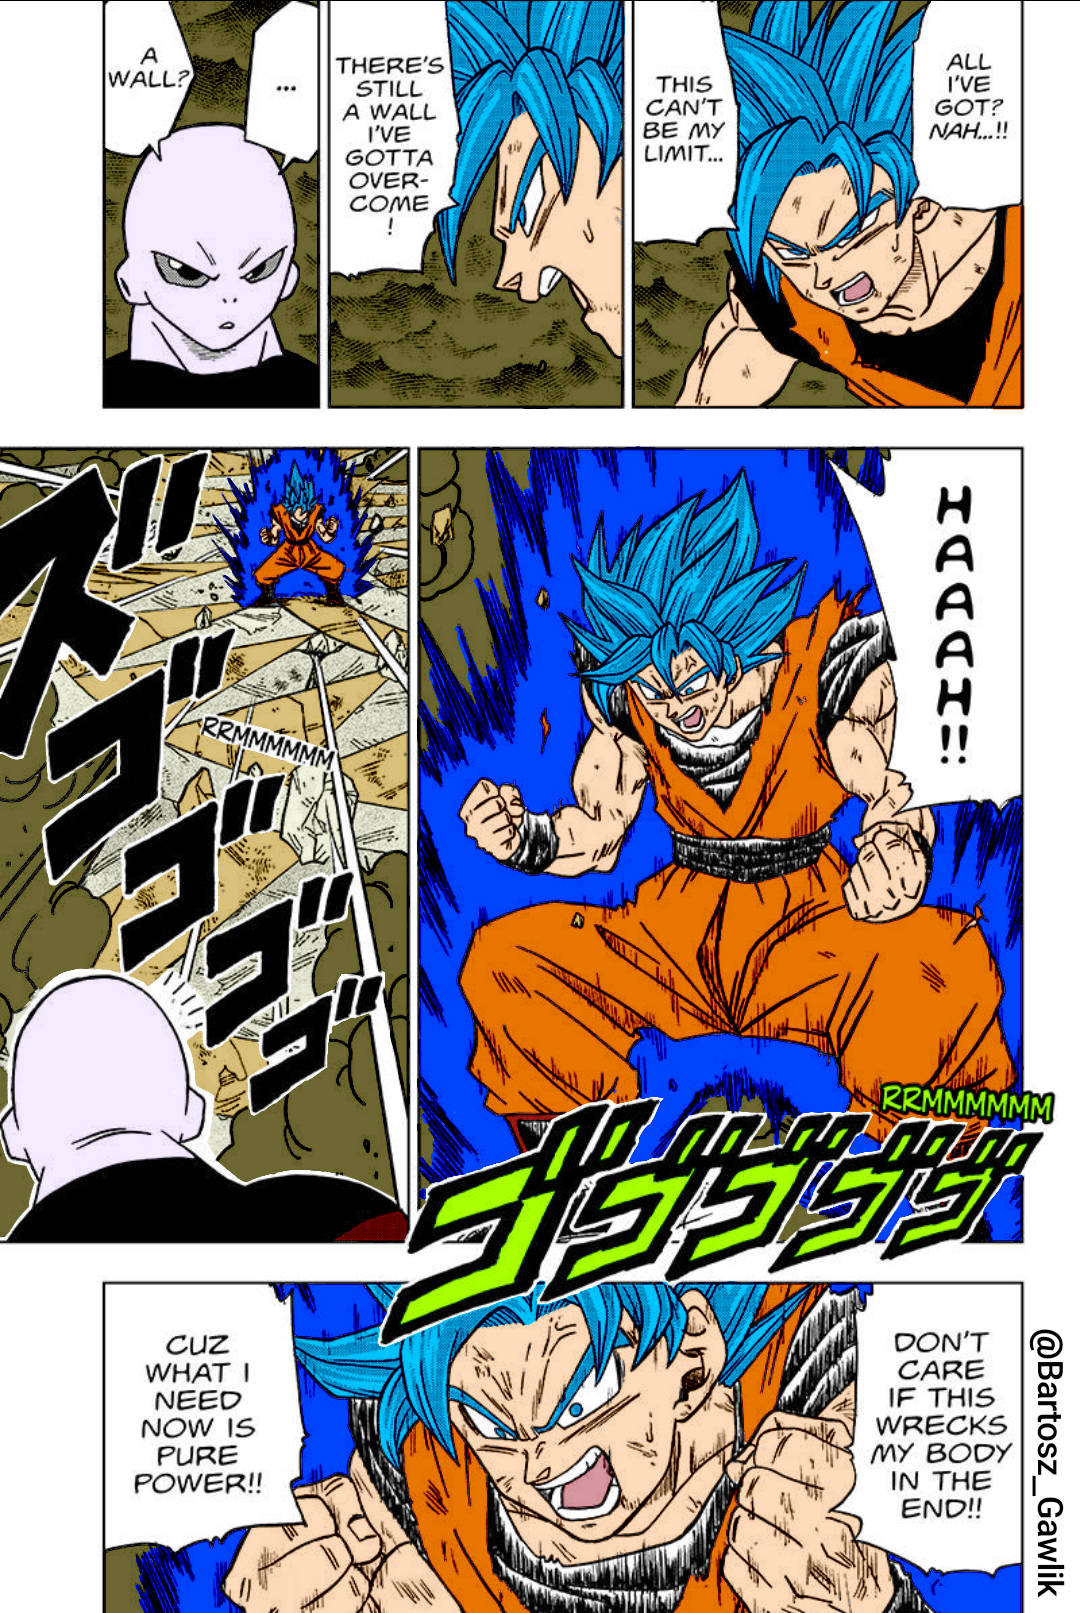 Manga 13 Dragon Ball Super (Restoration) Finished by NekoAR on DeviantArt